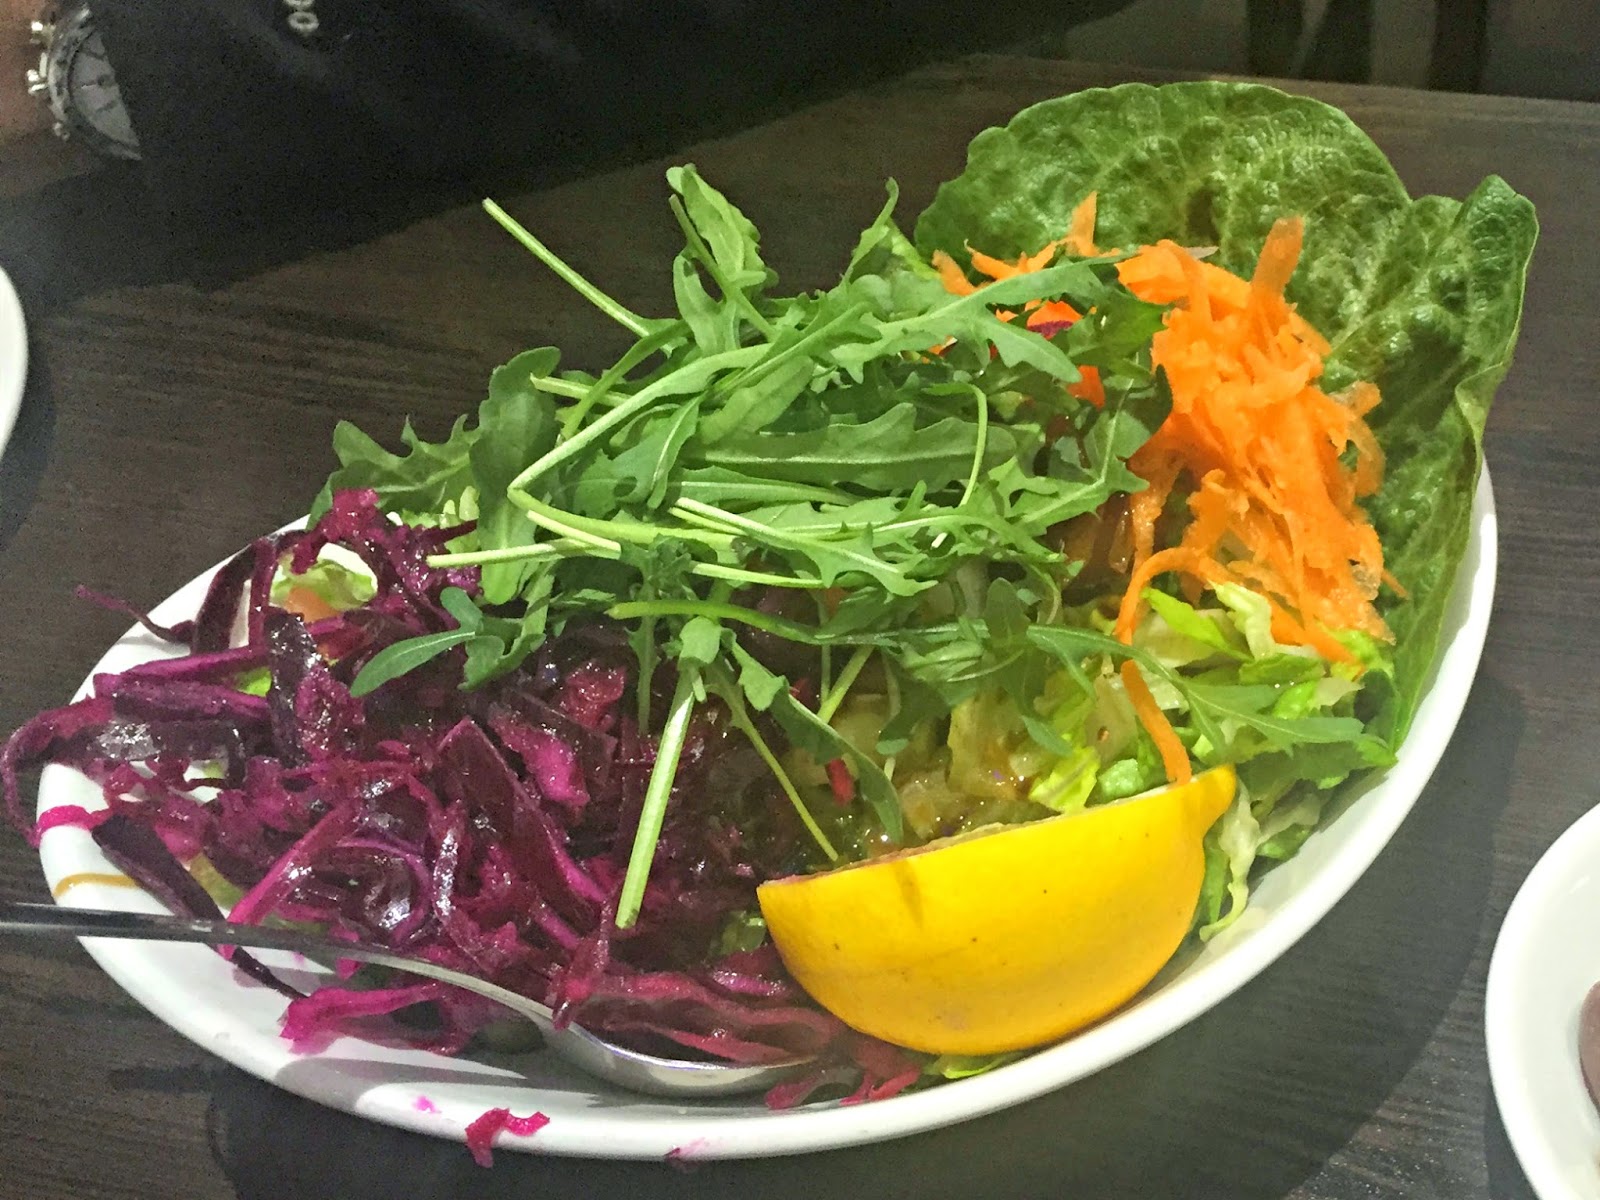 Plate with turkish salad